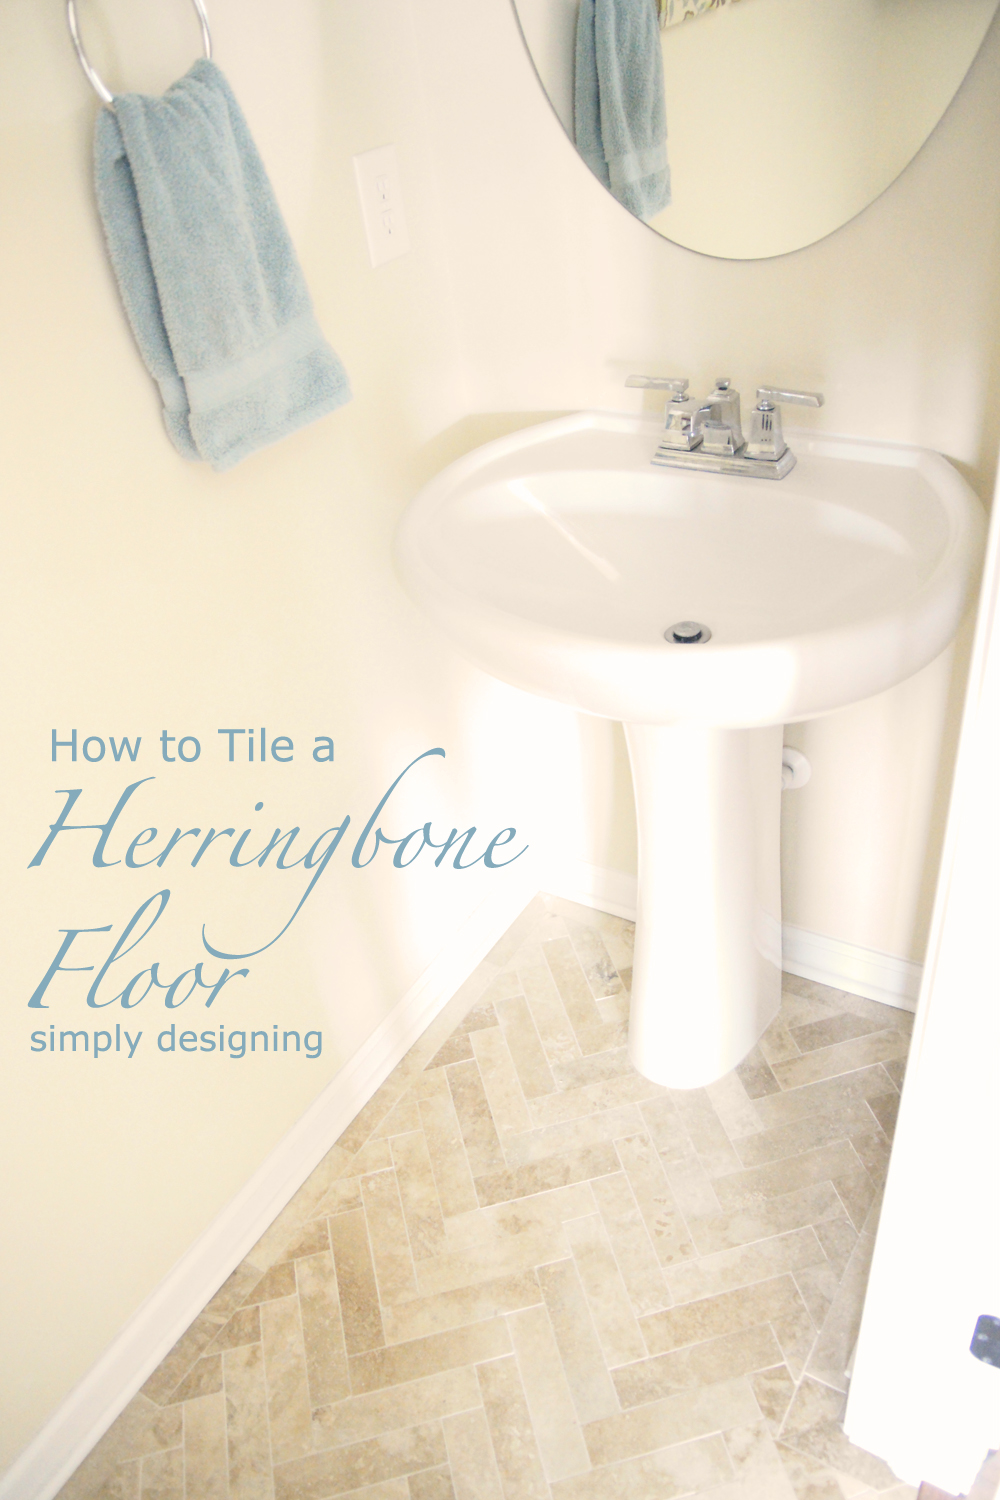 Herringbone Tile Floor - How to Prep, Lay, and Install